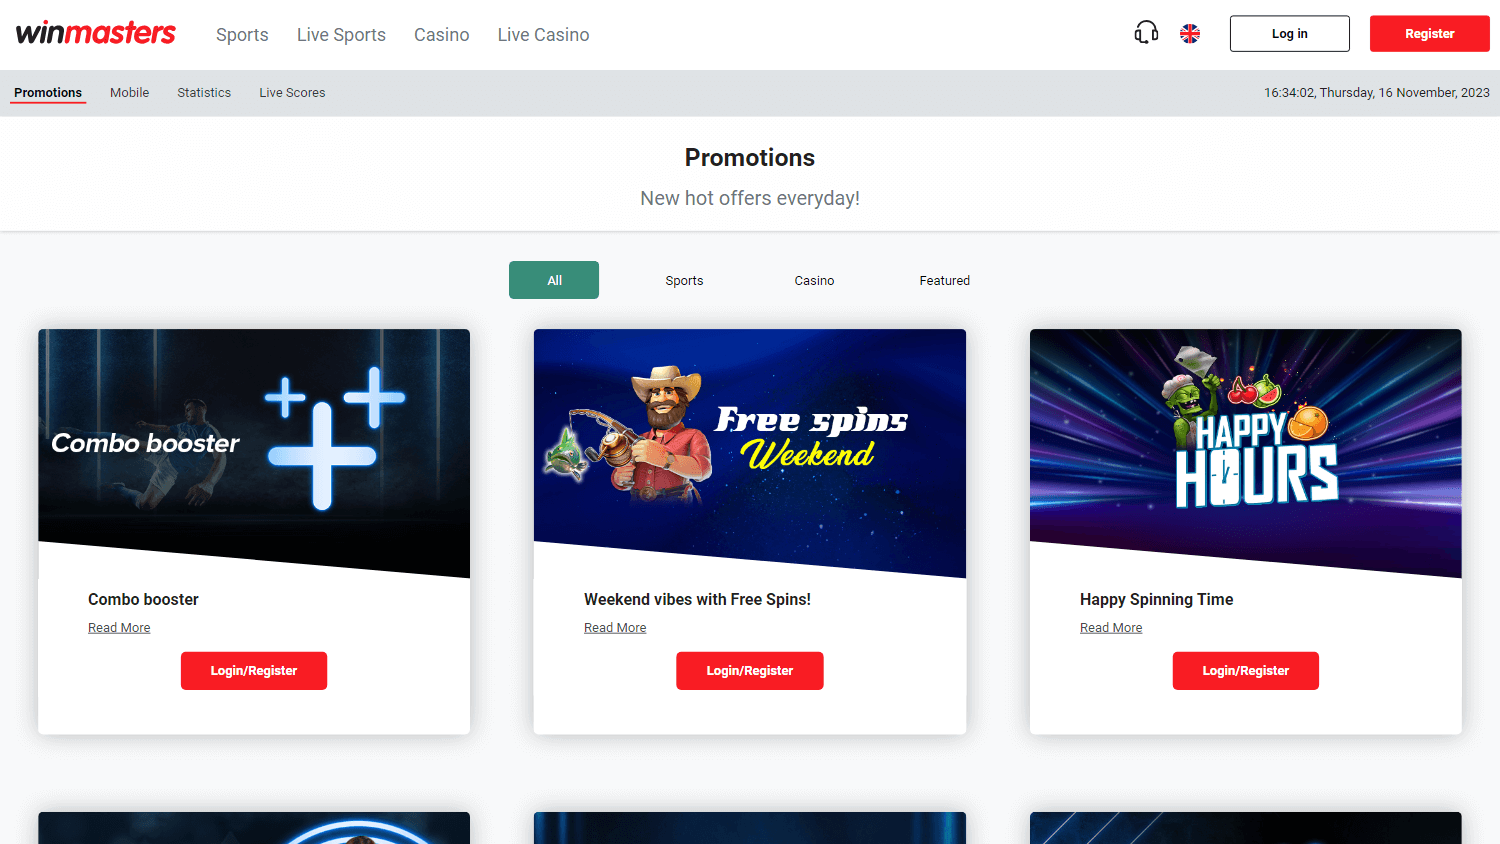 winmasters_casino_promotions_desktop